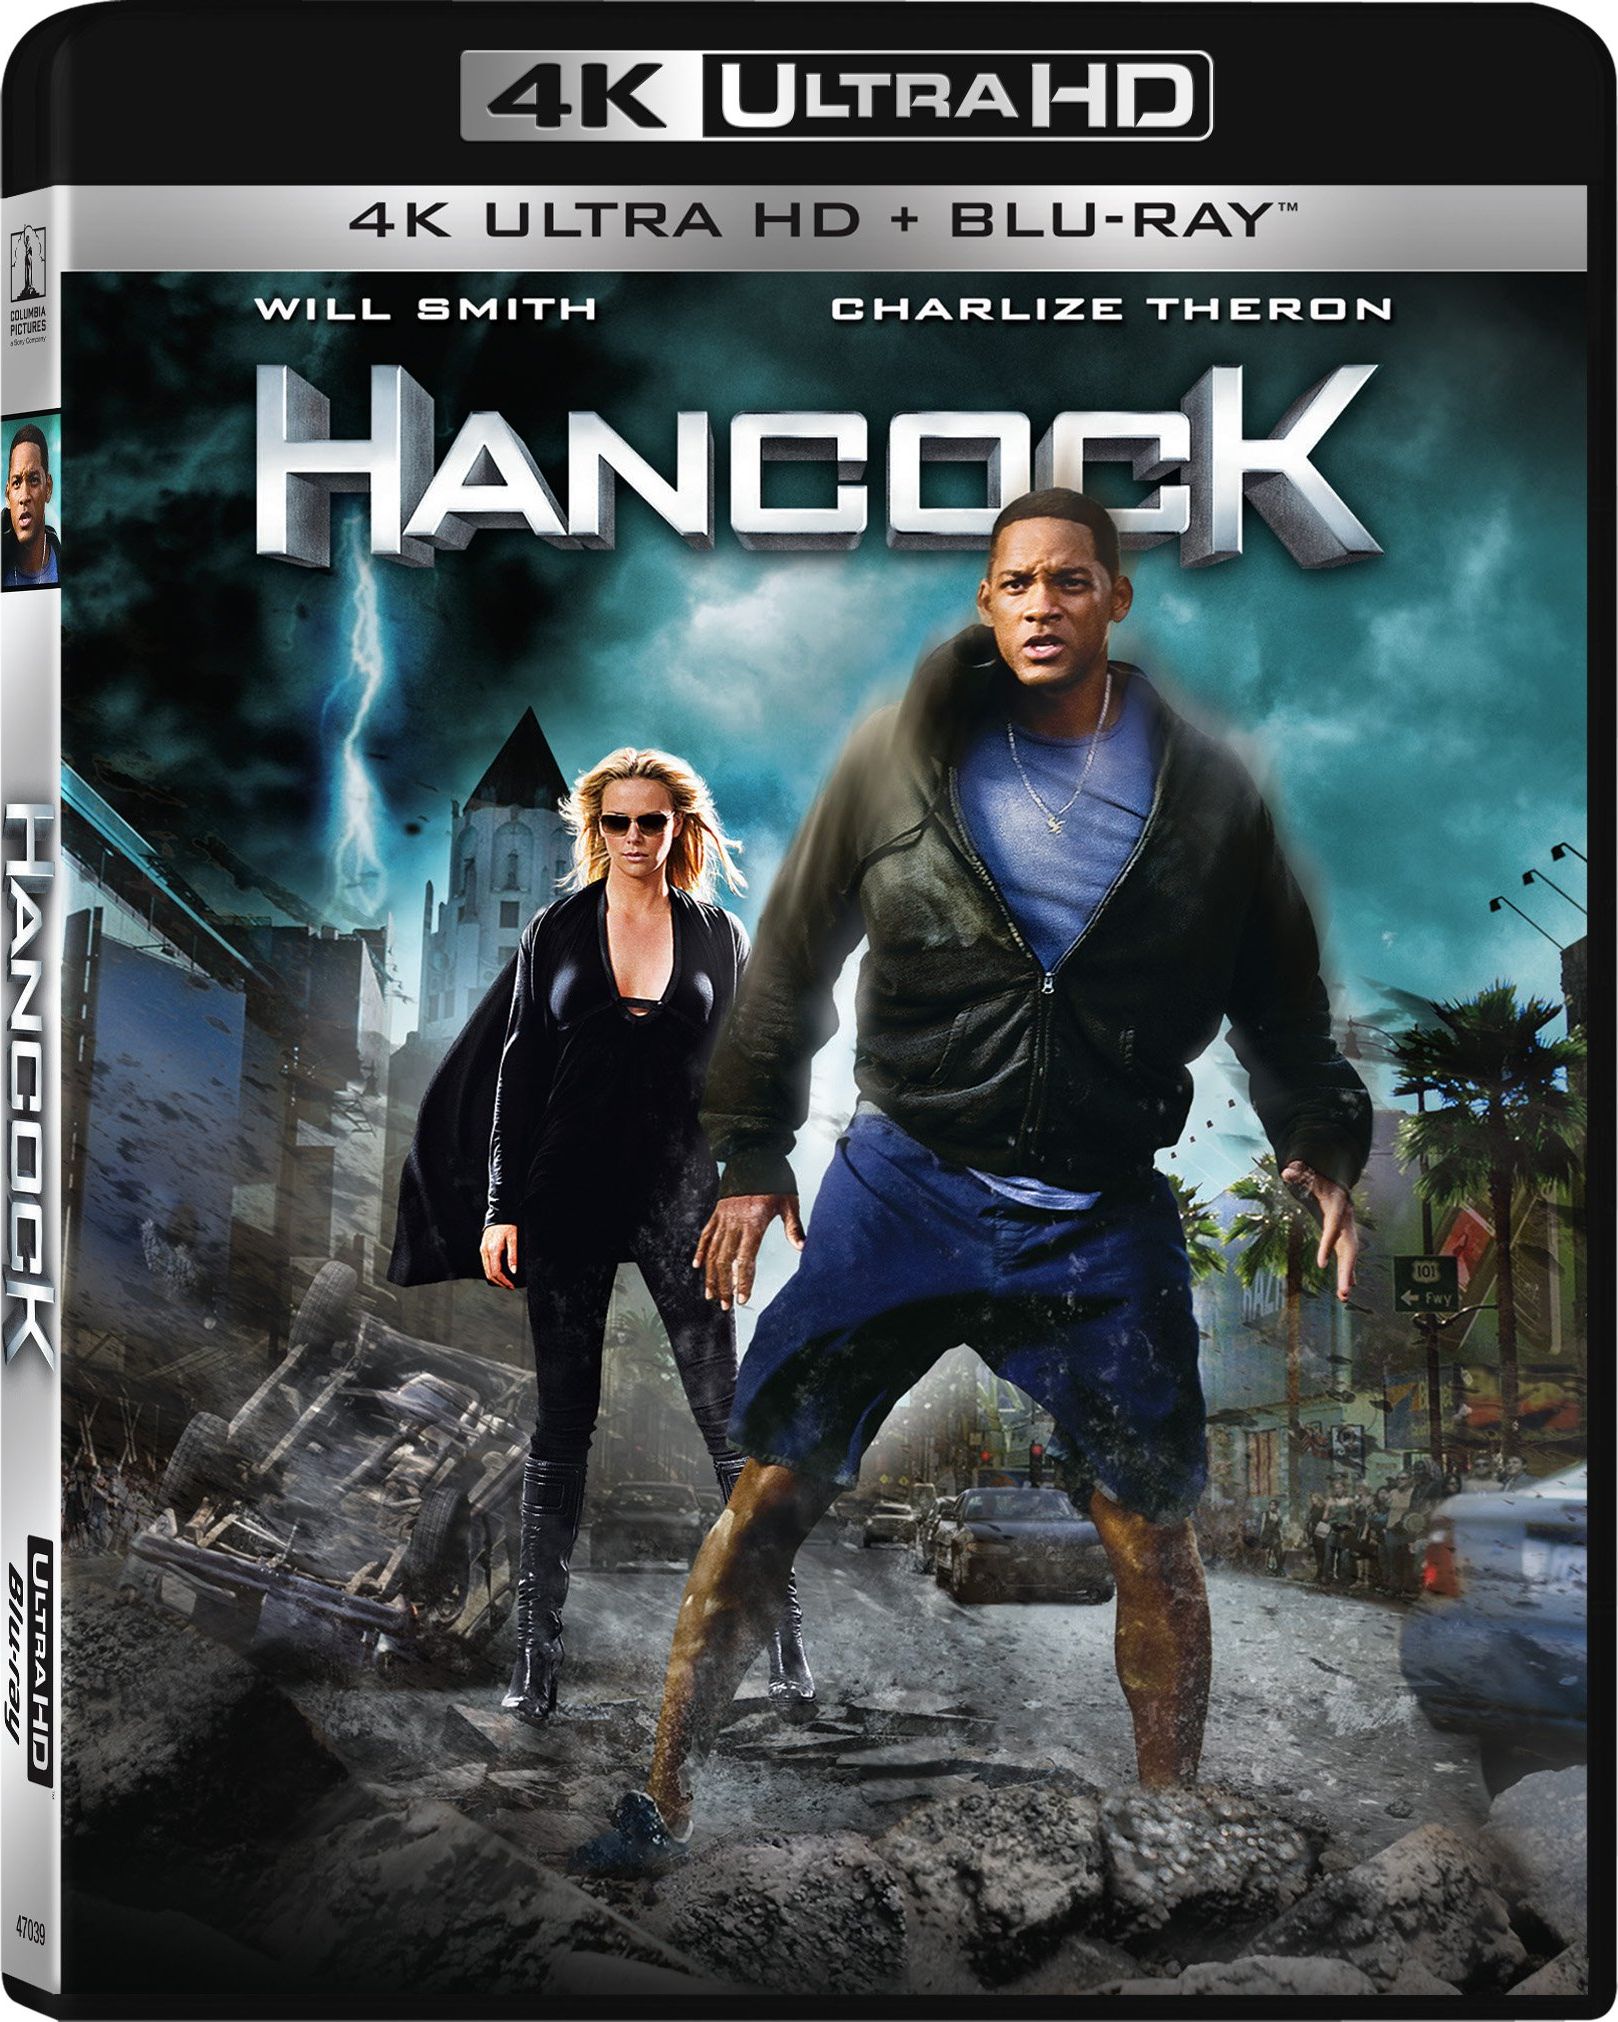 Hancock 2 release date